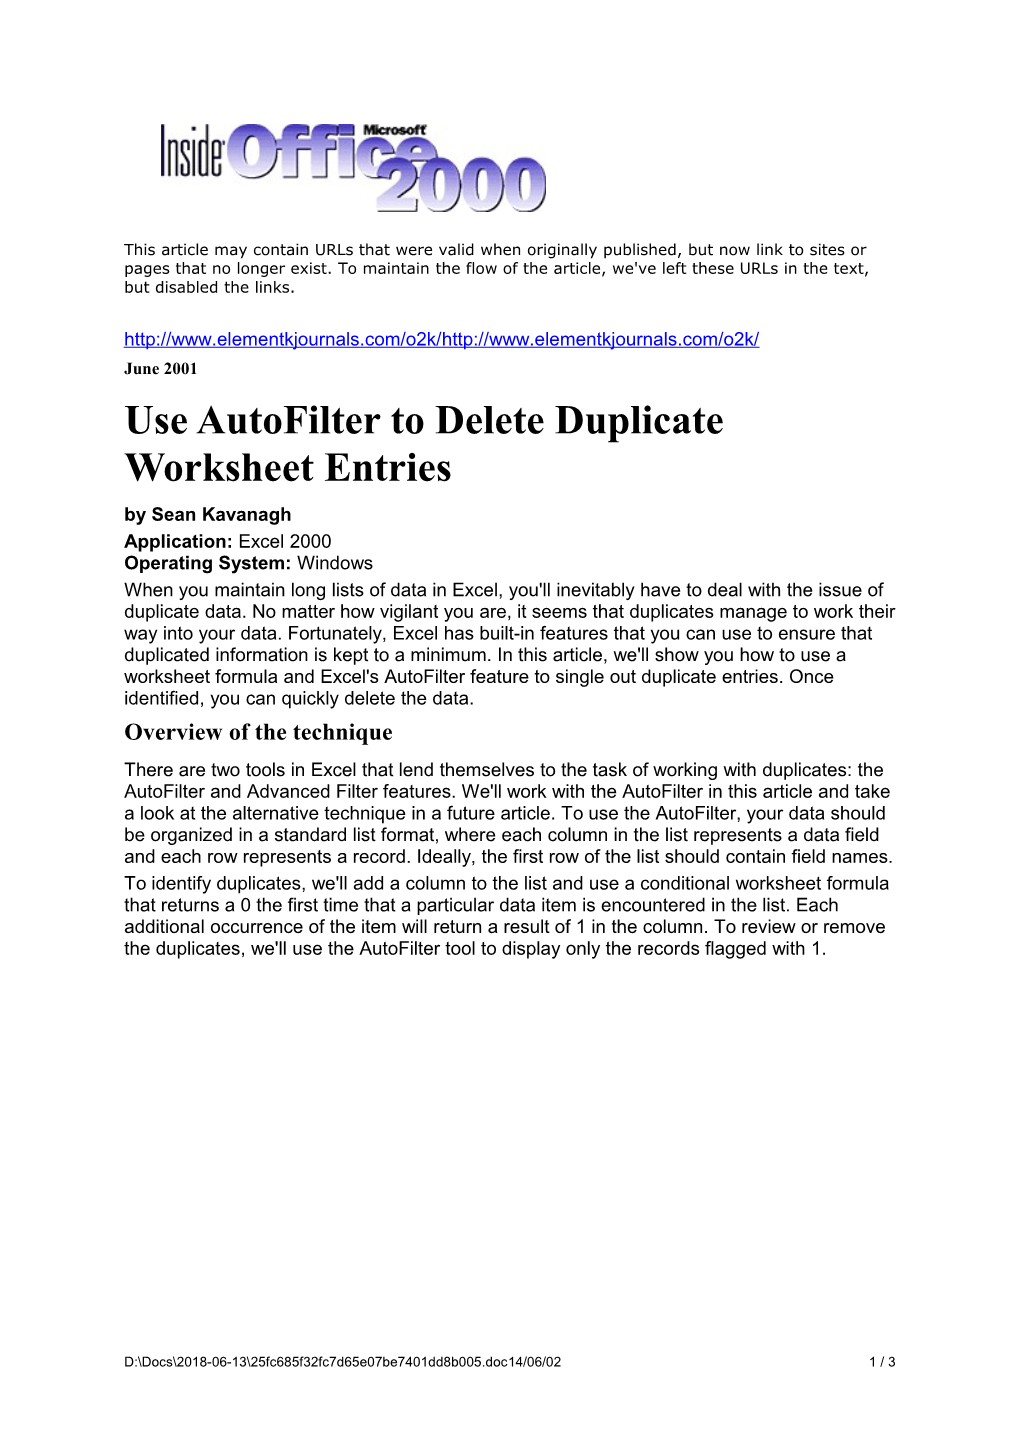 Use Autofilter to Delete Duplicate Worksheet Entries